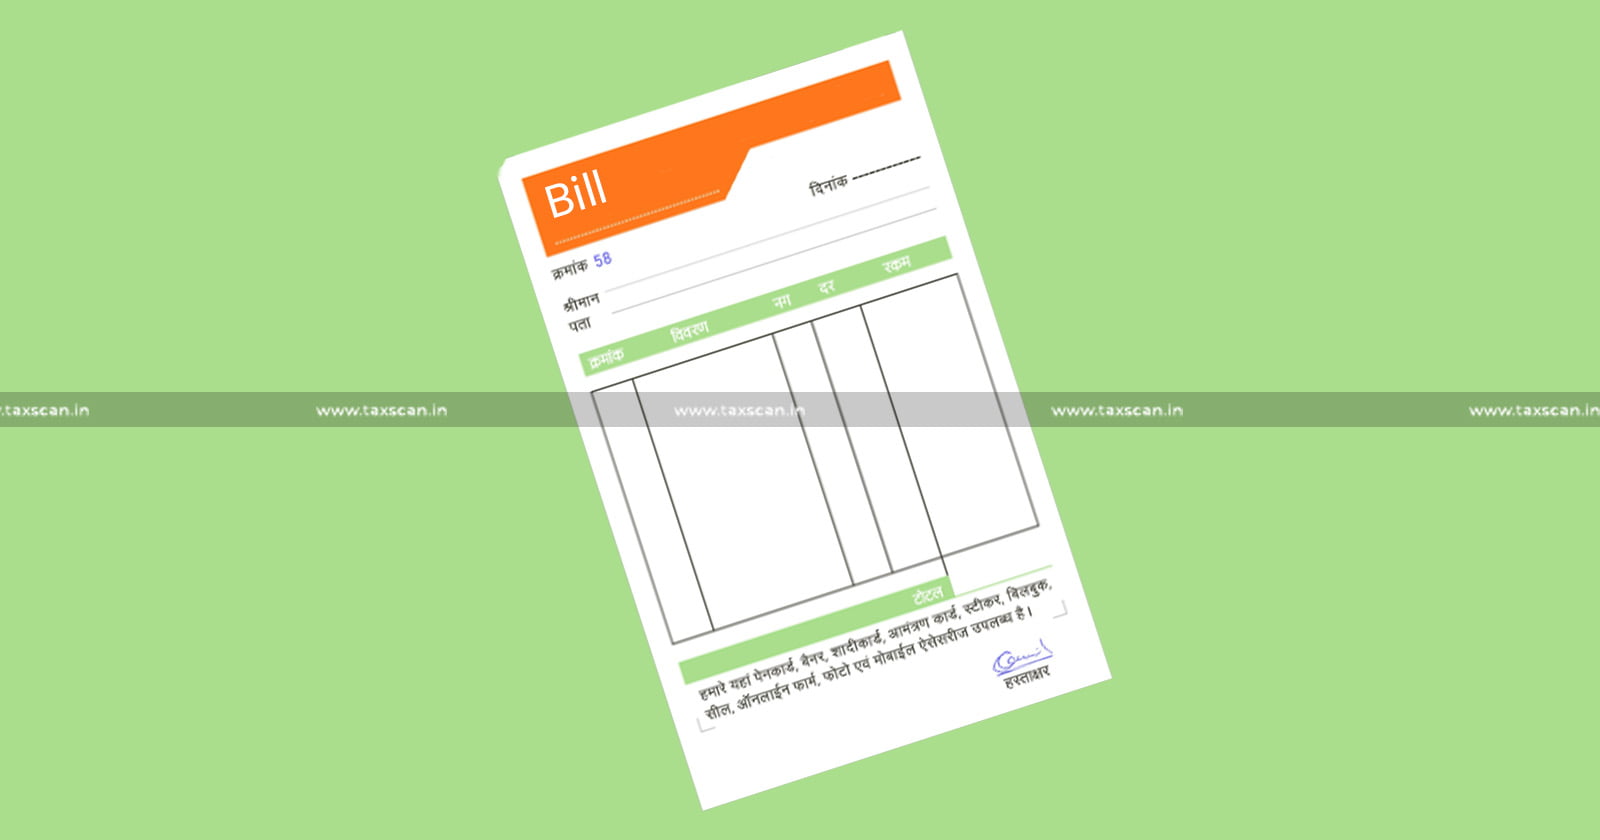 Audited Books of Accounts - Photocopy of Bills - Bills - ITAT - taxscan